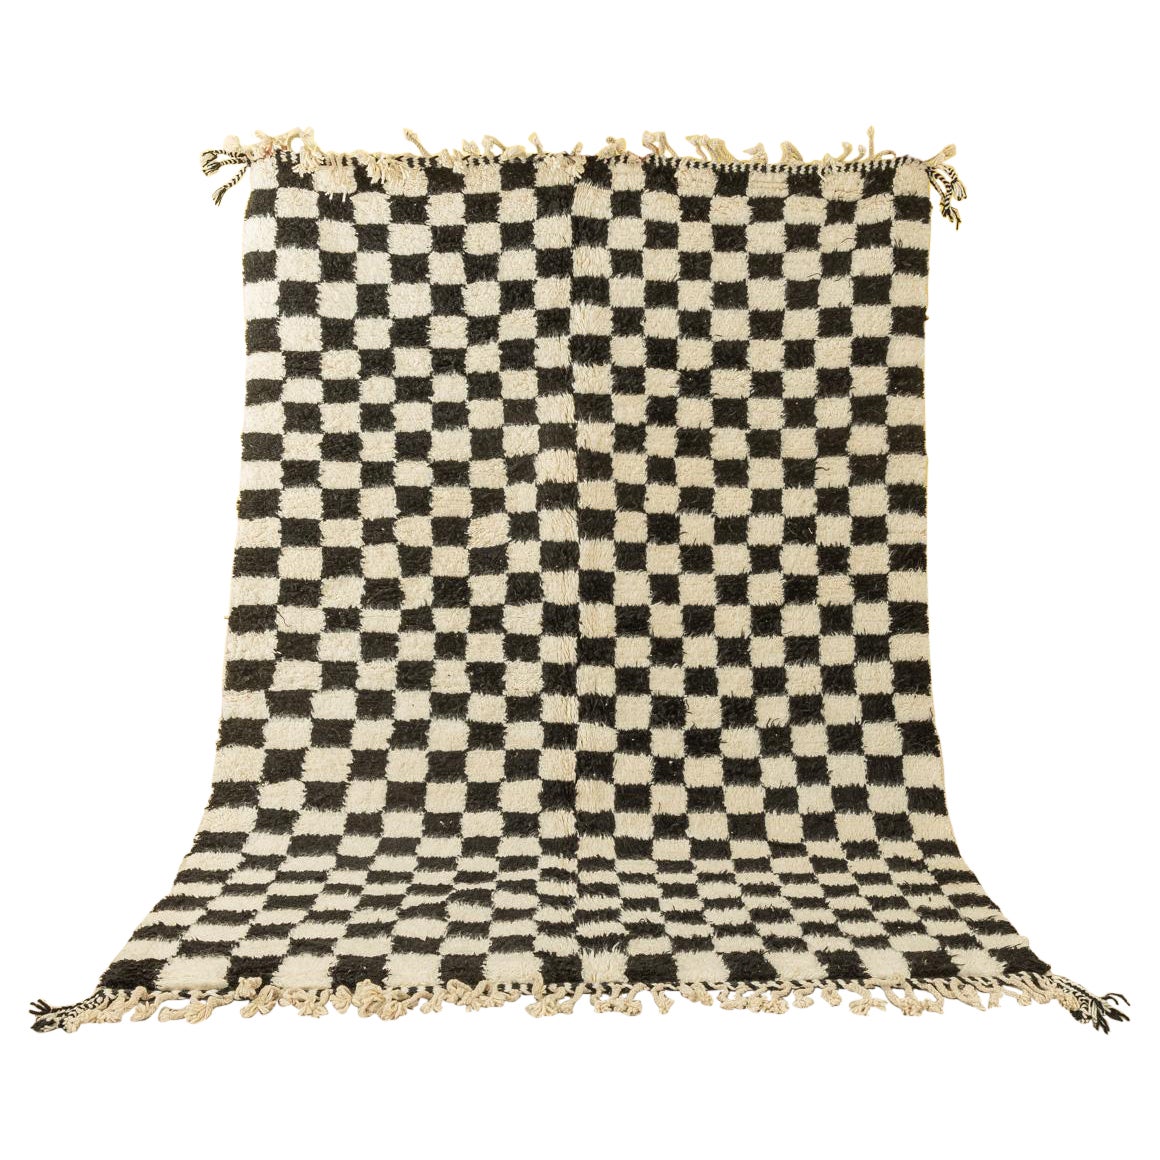 Classic Chess Contemporary Beni Ourain Moroccan Berber Rug black chessboard For Sale